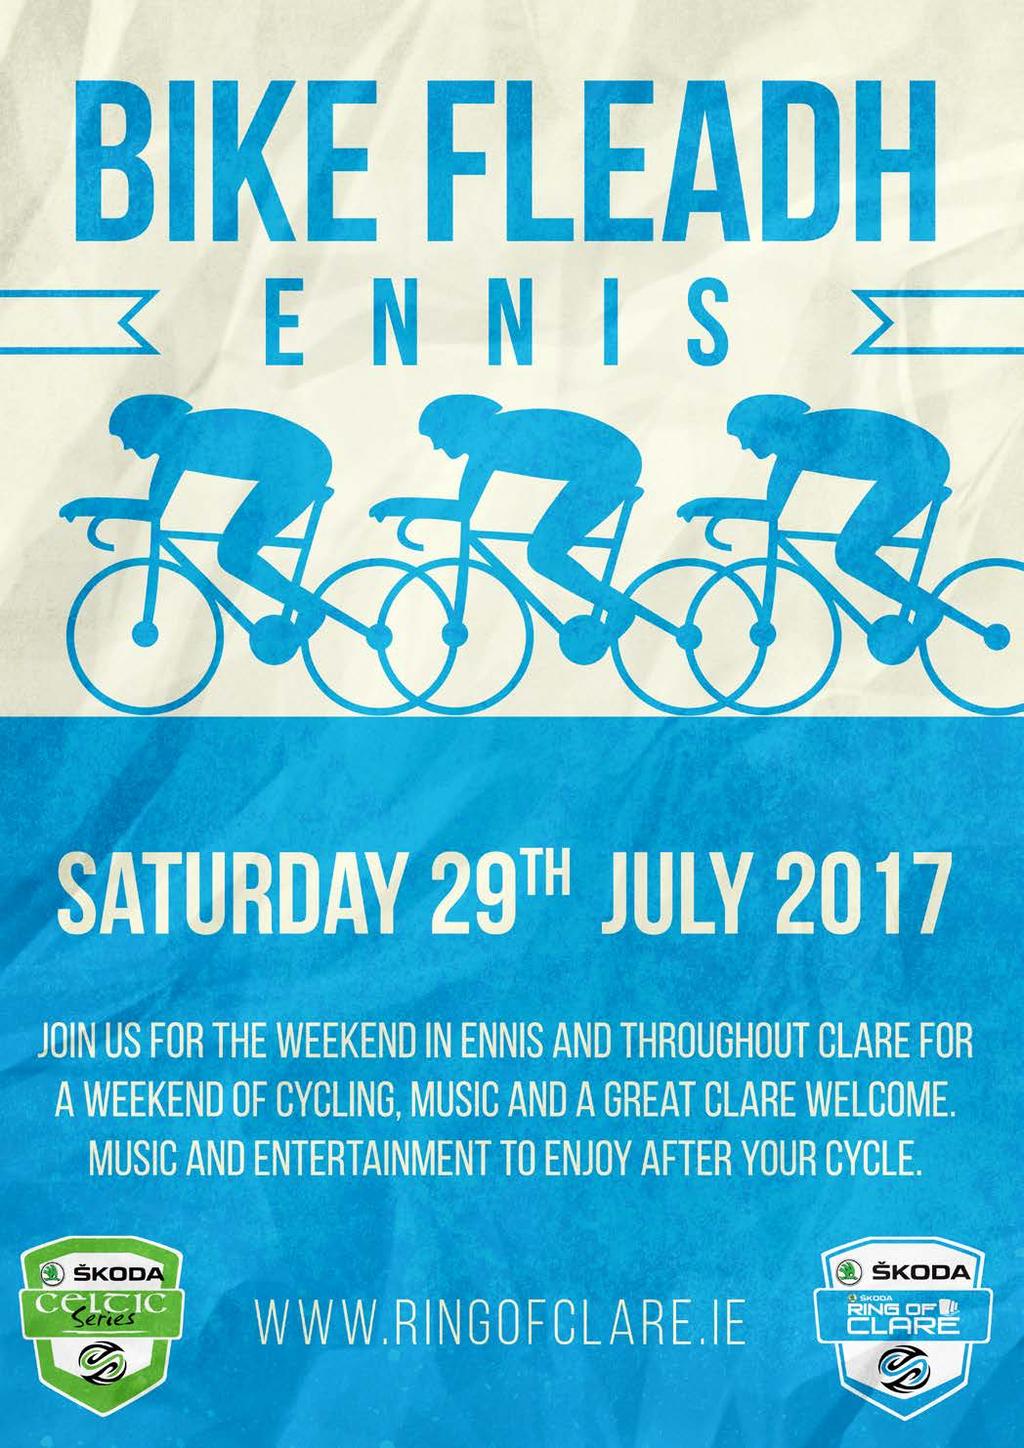 July 29 th Saturday Night Bike Fleadh Trad Trail in Ennis From 6.30pm: From 8.00pm: From 8.00pm: From 9.30pm: From 9:30pm: From 9.